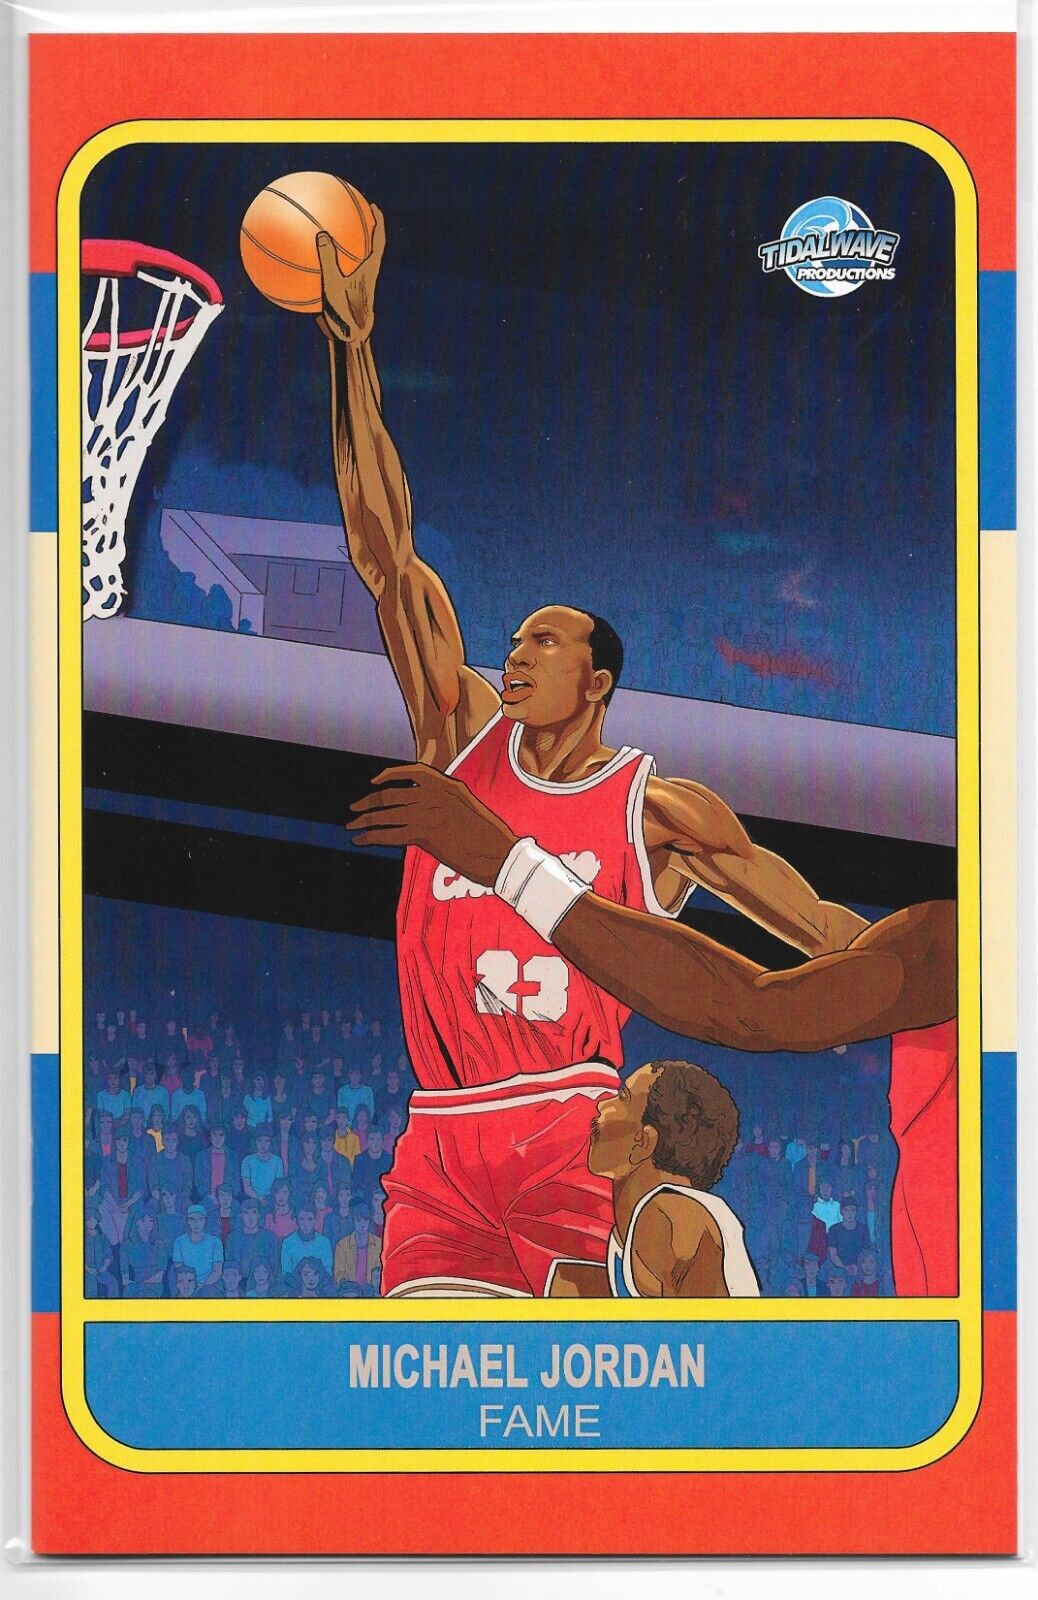 2024 Michael Jordan Fame 1 Comic Book 1986 Fleer Rookie Card Variant RC /100